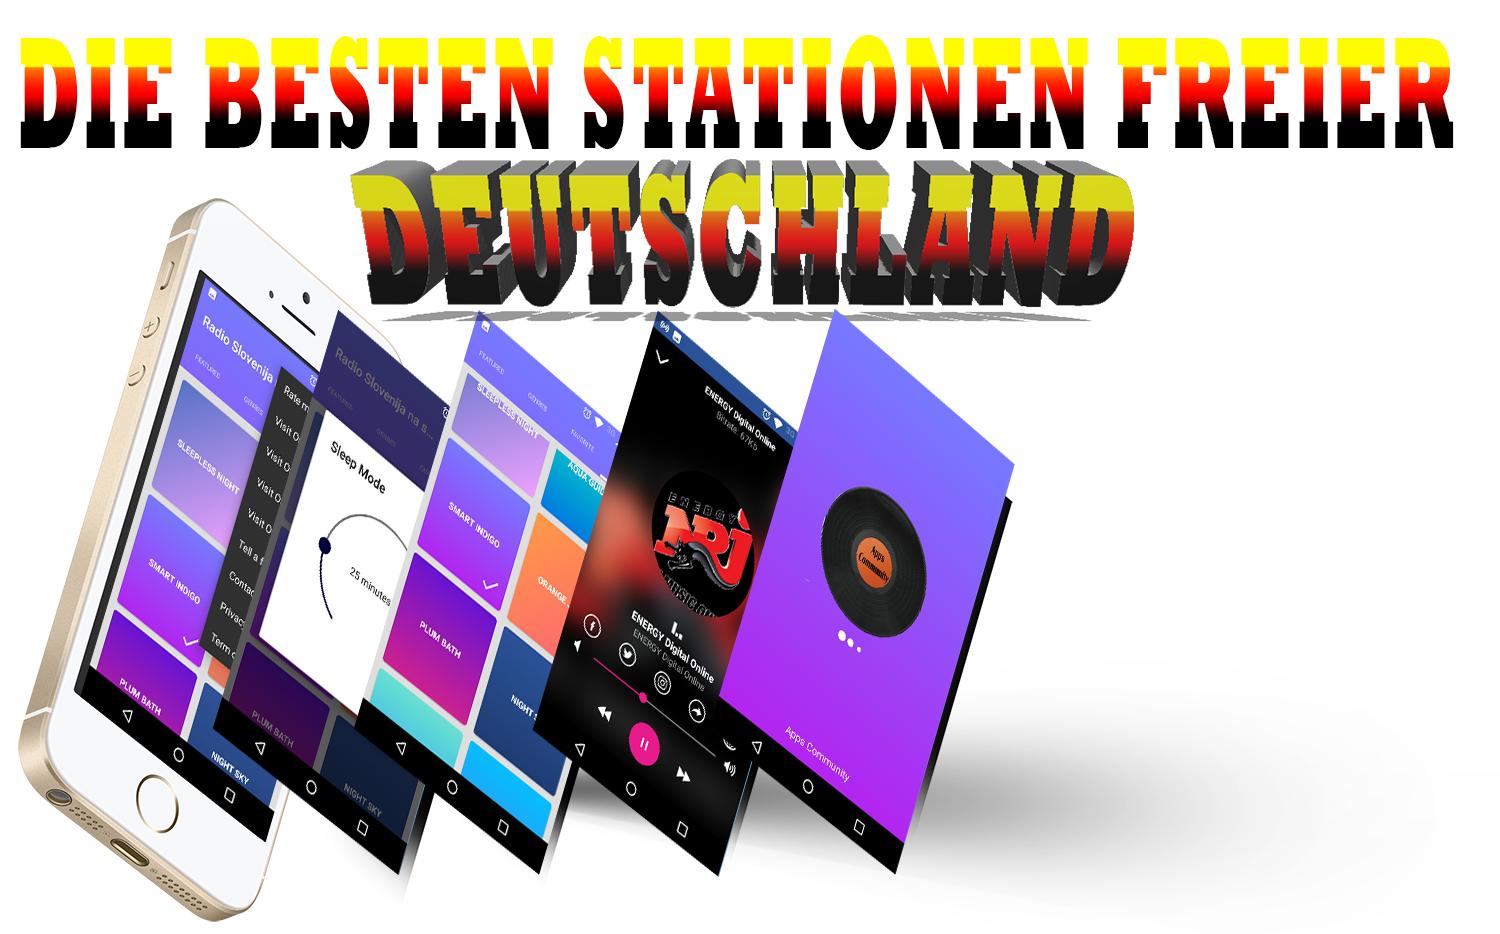 Radio Hamburg Online for Android - APK Download